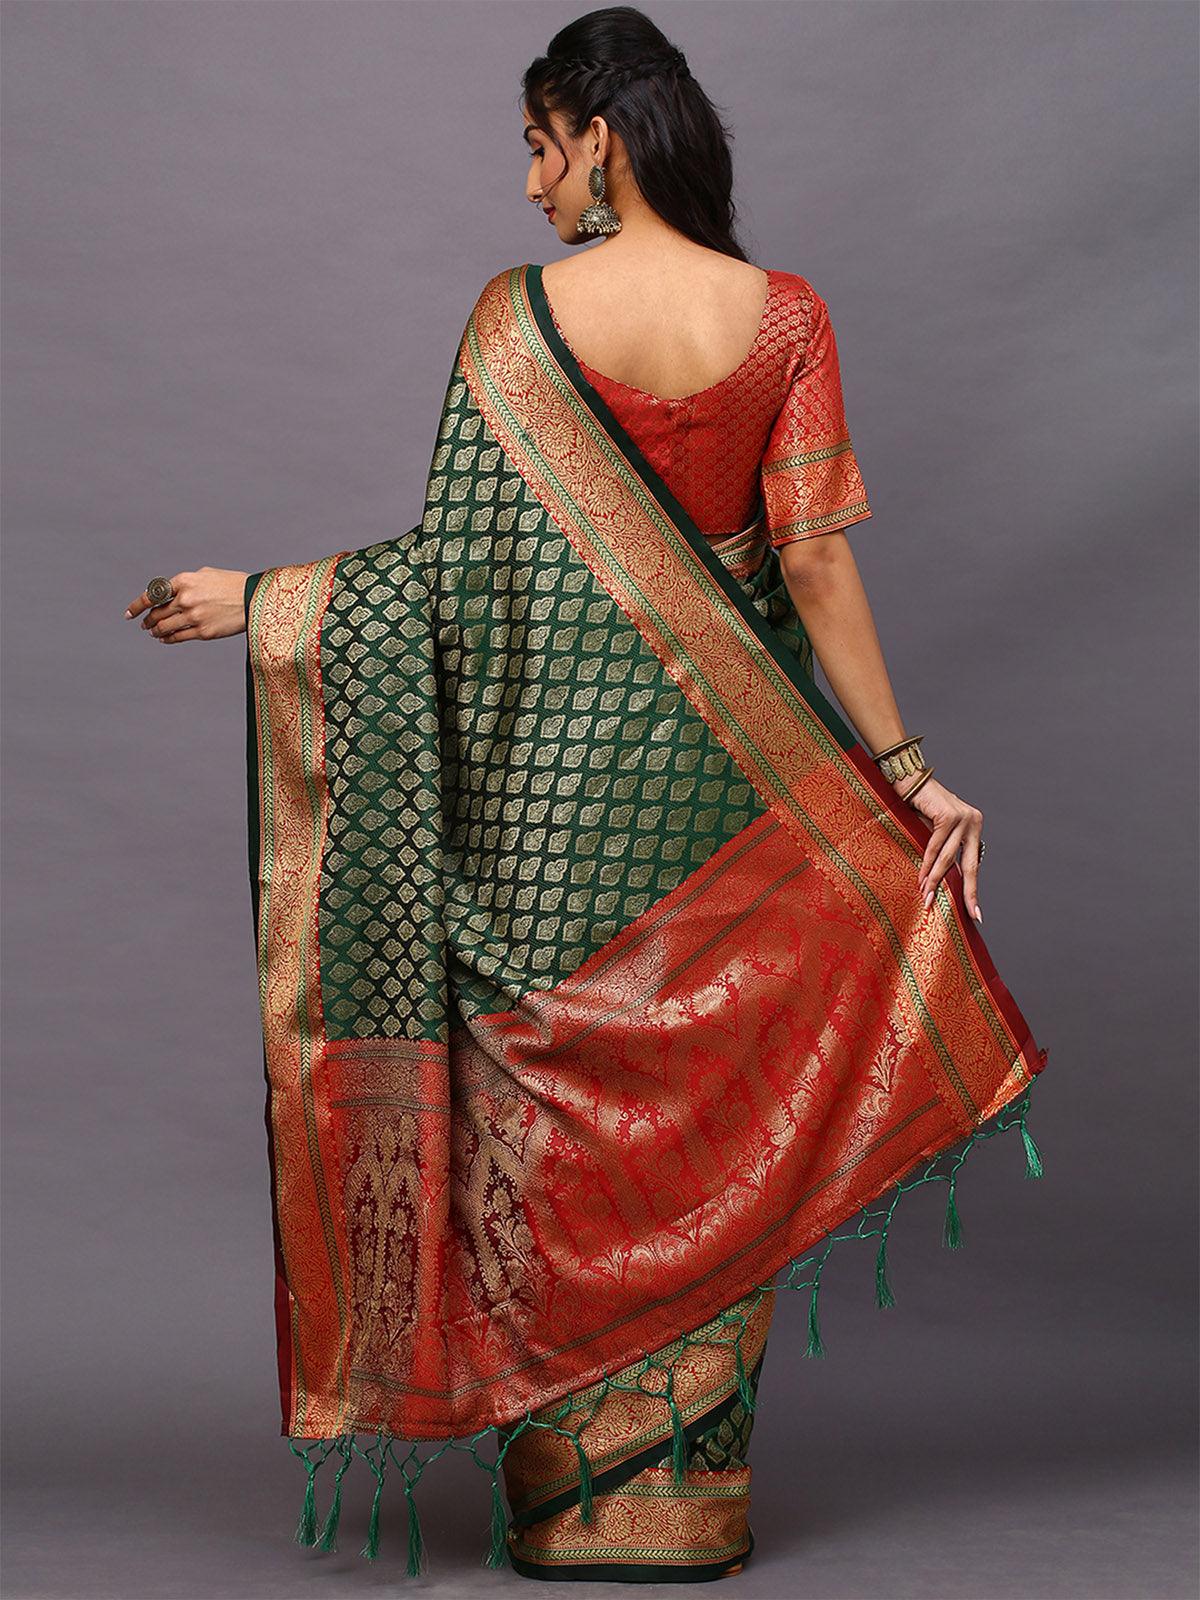 Women's Silk Blend Green Woven Design Designer Saree With Blouse Piece - Odette